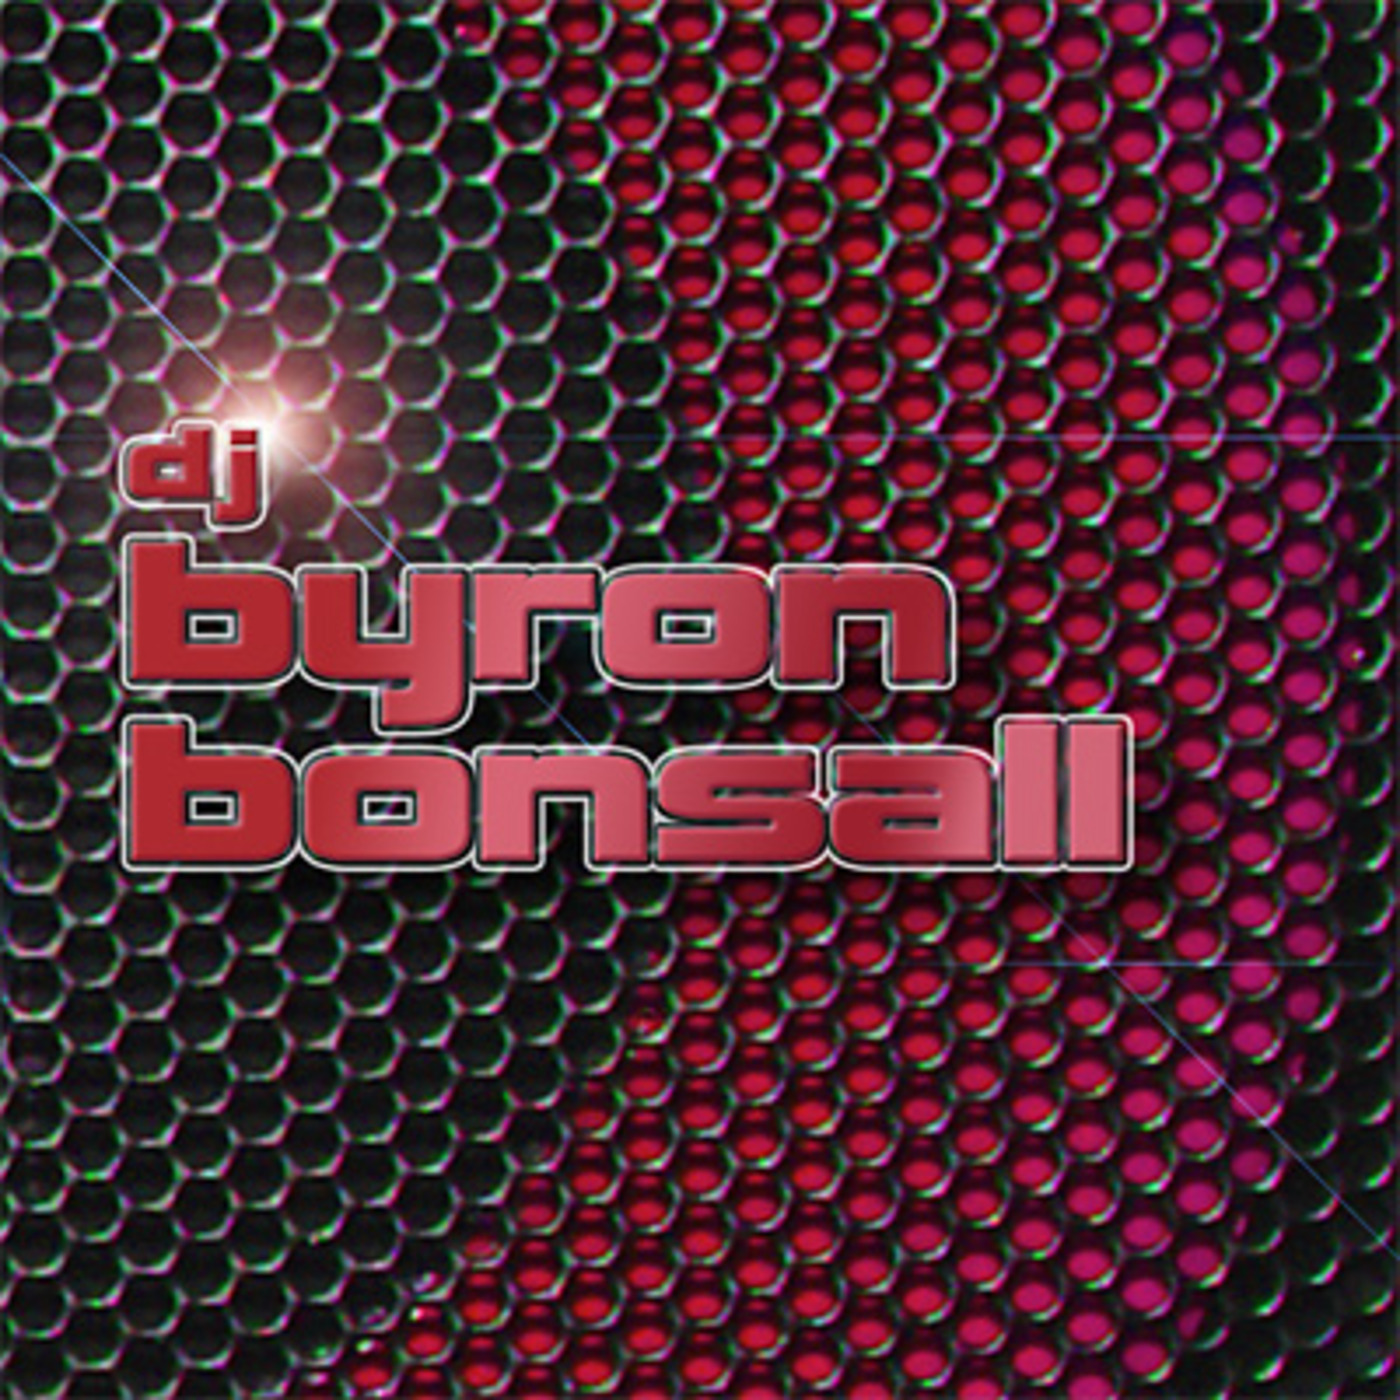 DJ Byron Bonsall